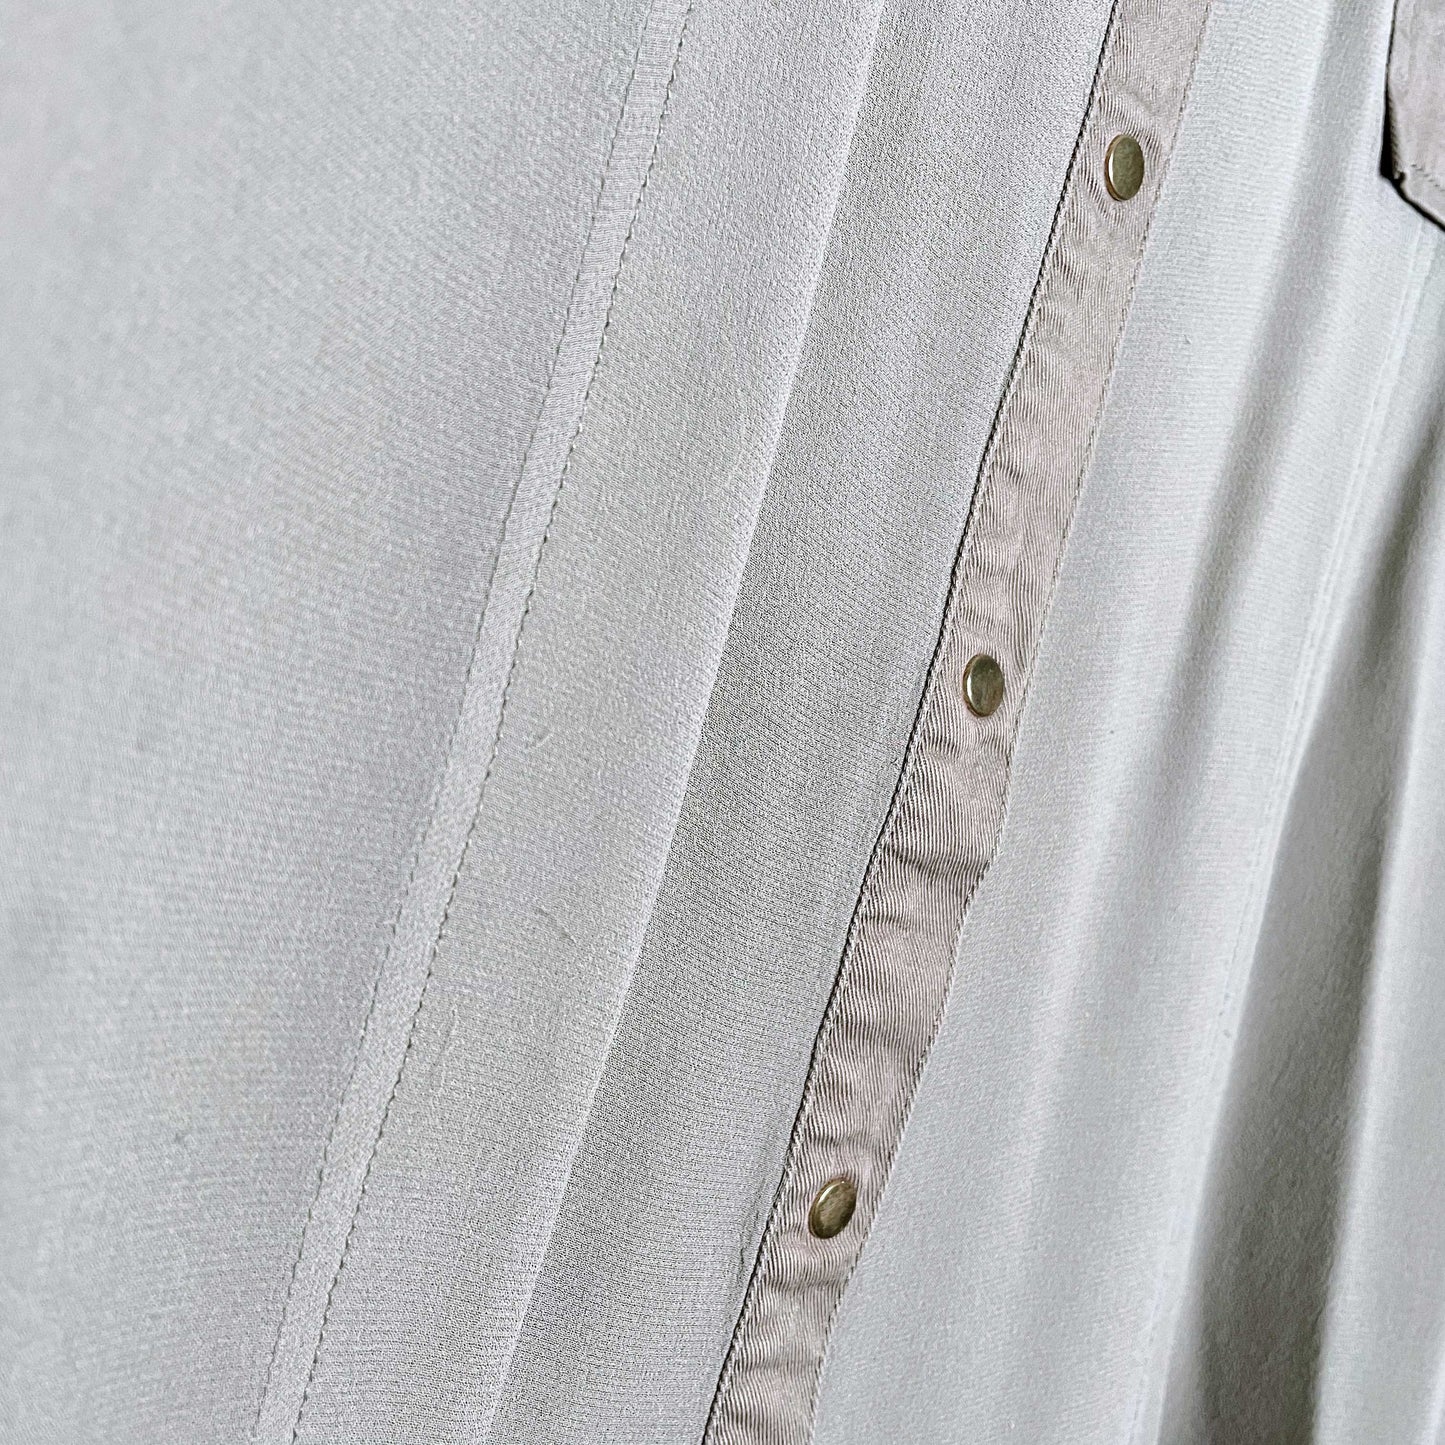 sass and bide silk chiffon twill combo utility button down shirt - size 44